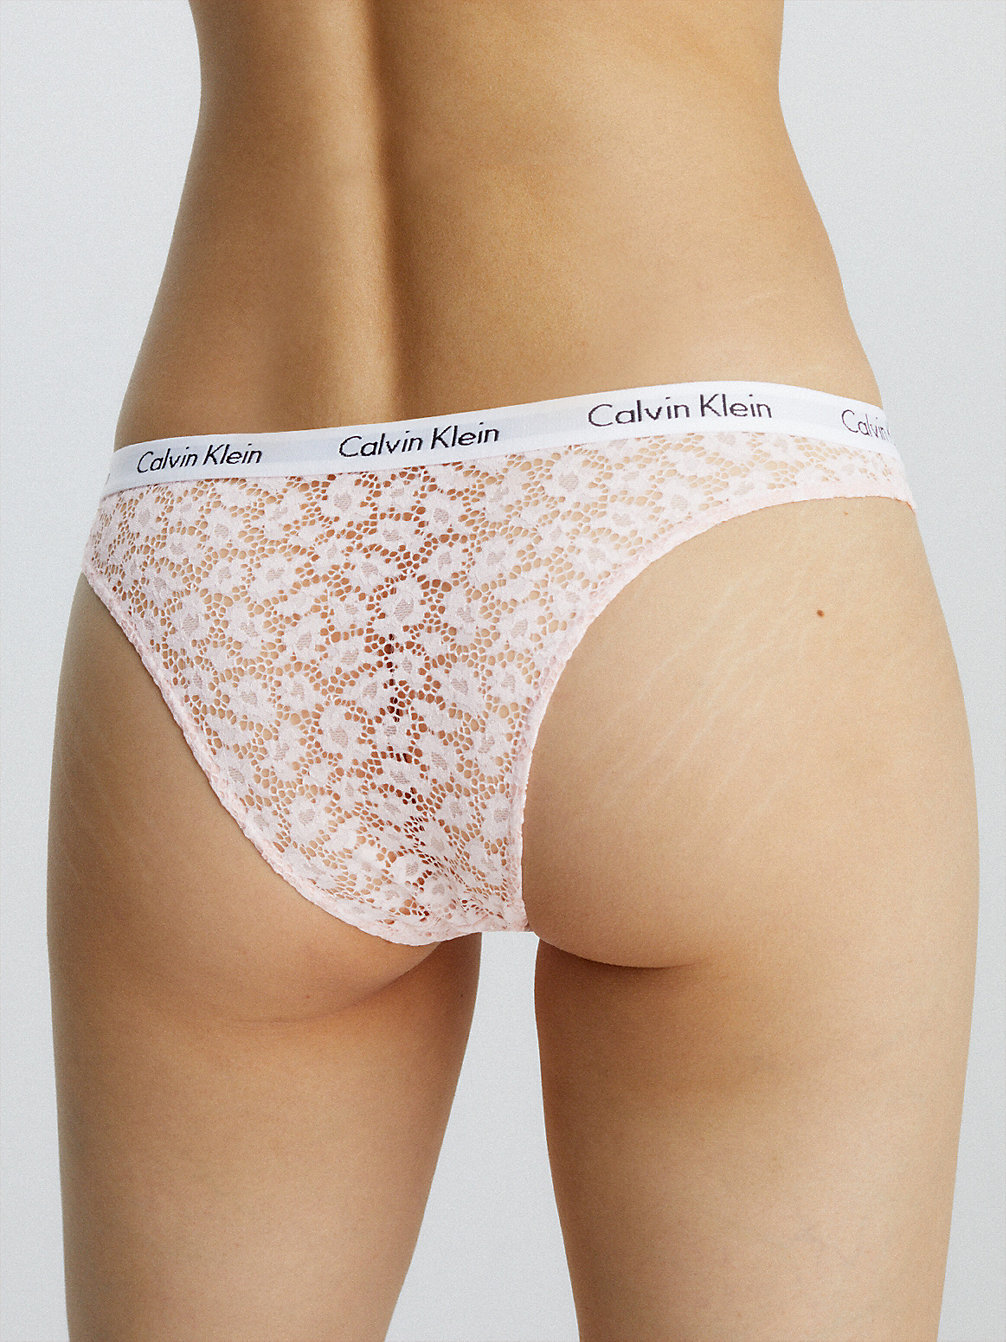 NYMPHS THIGH Brazilian Slip – Carousel undefined Damen Calvin Klein